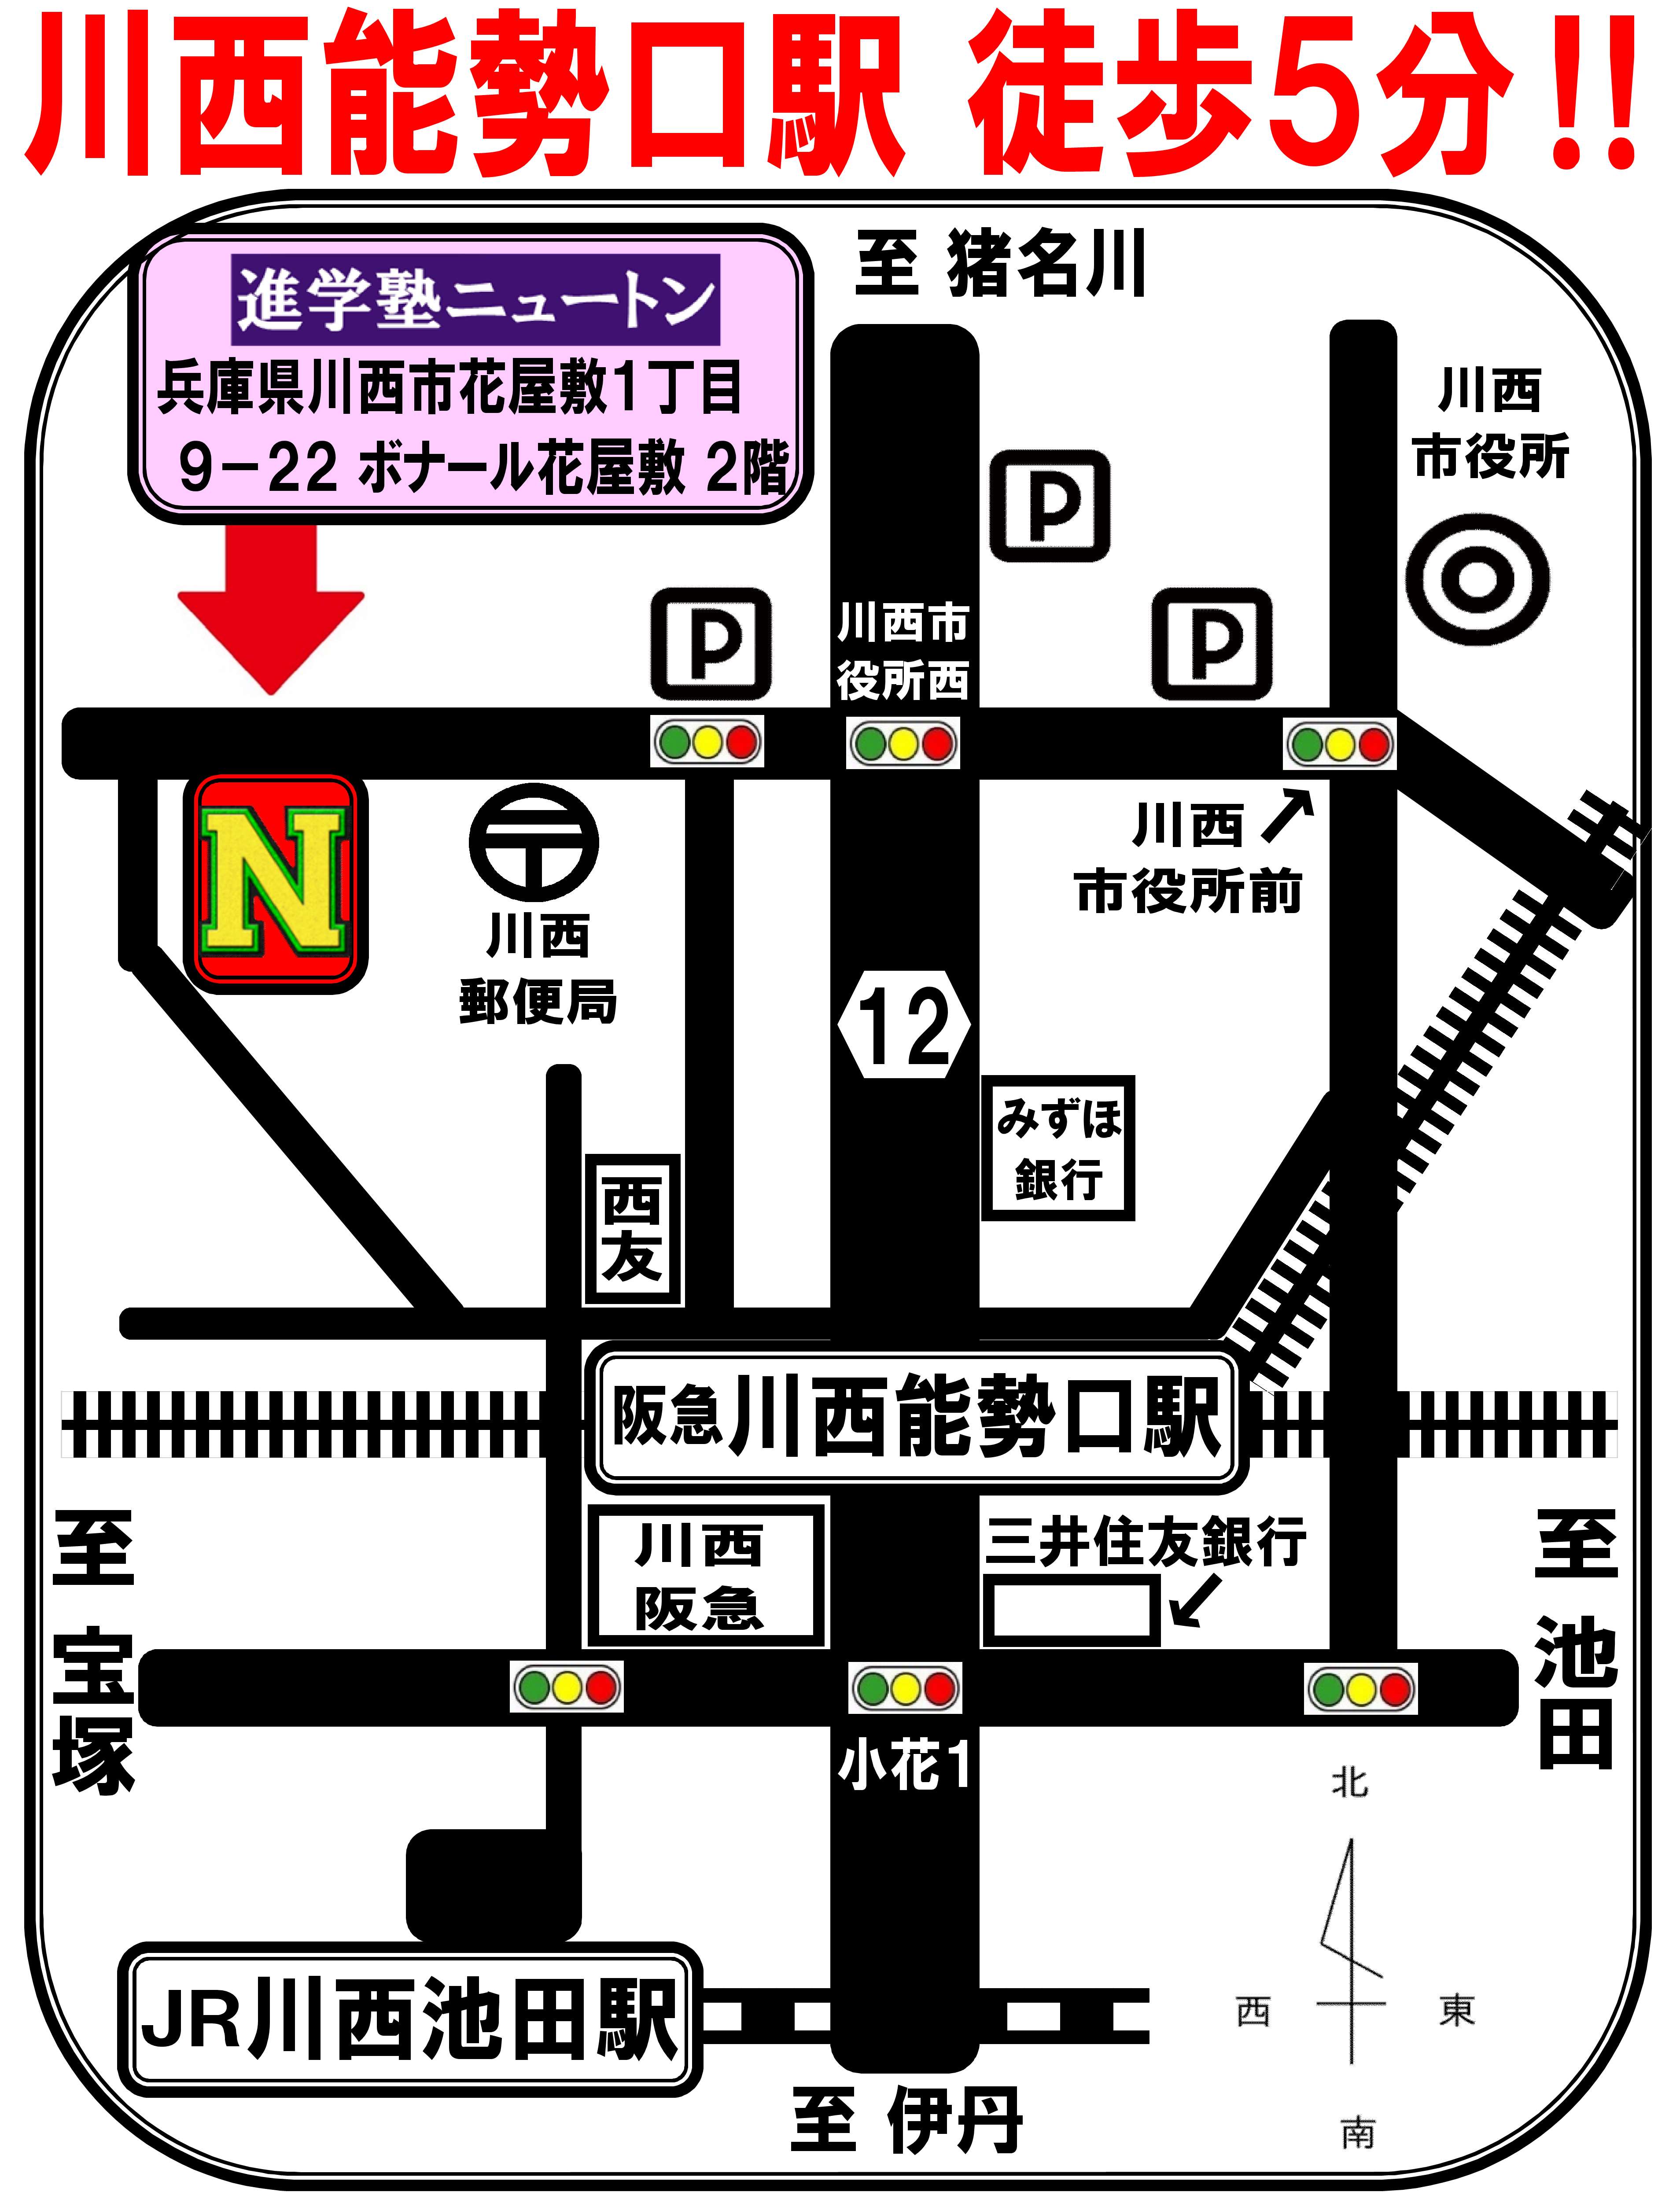 教室地図「ボナール花屋敷(川西能勢口)」